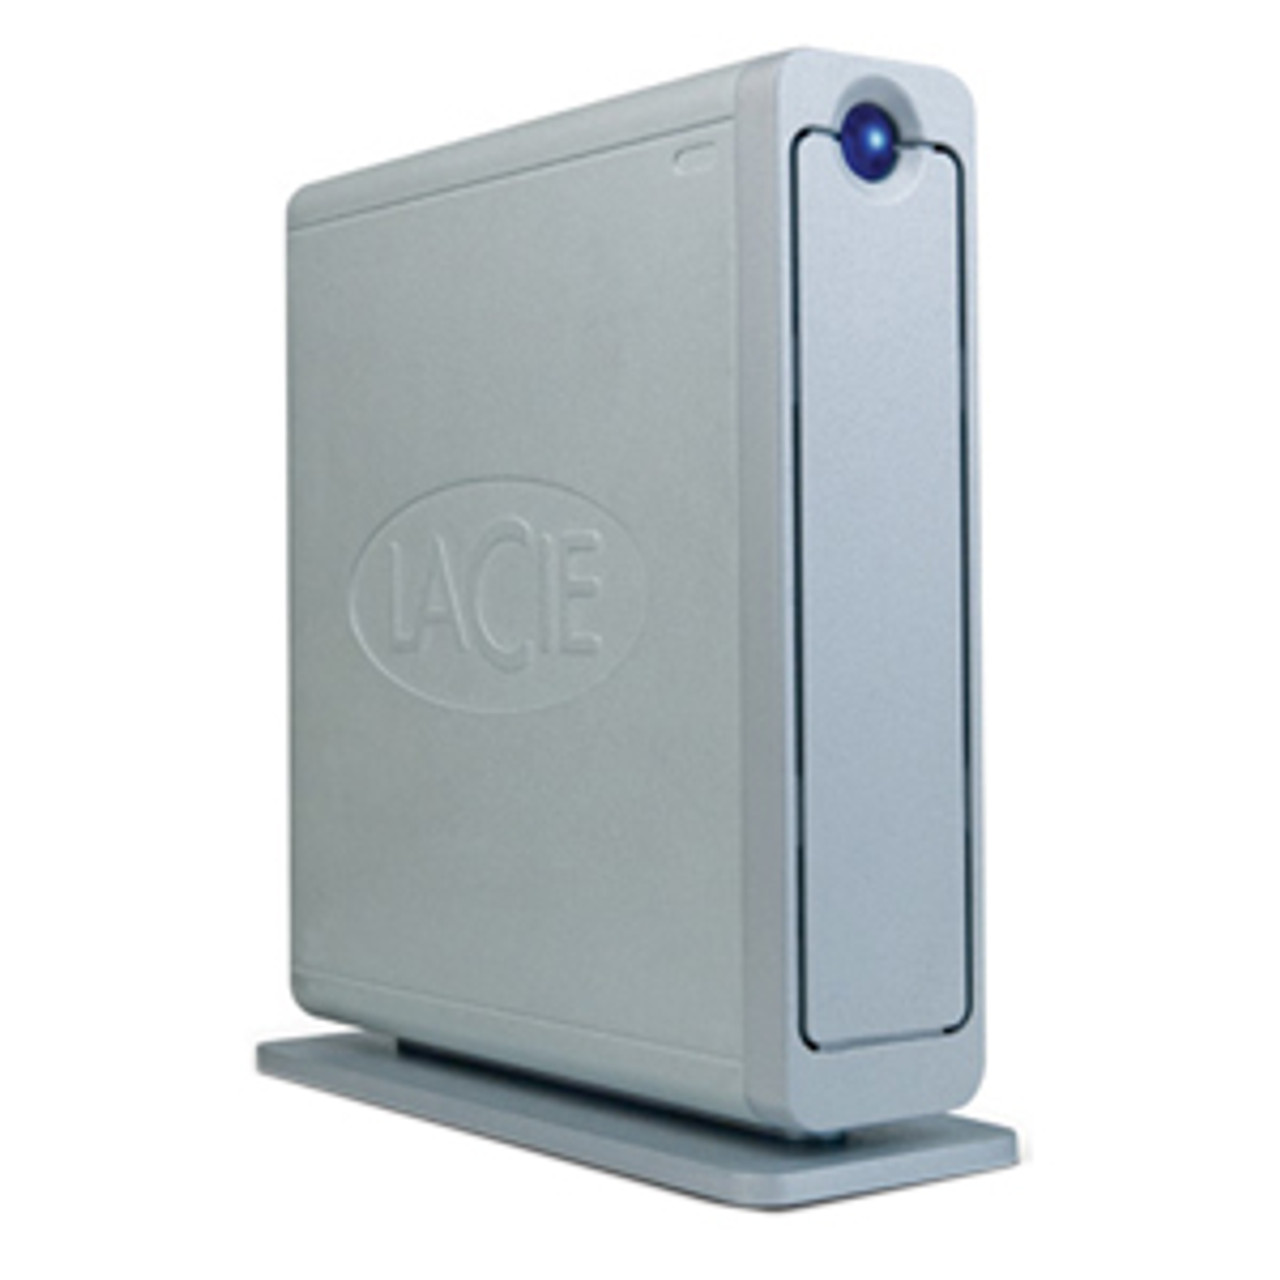 301241 - LaCie d2 320 GB Internal Hard Drive - SATA/300 - 7200 rpm - 8 MB Buffer - Hot Swappable